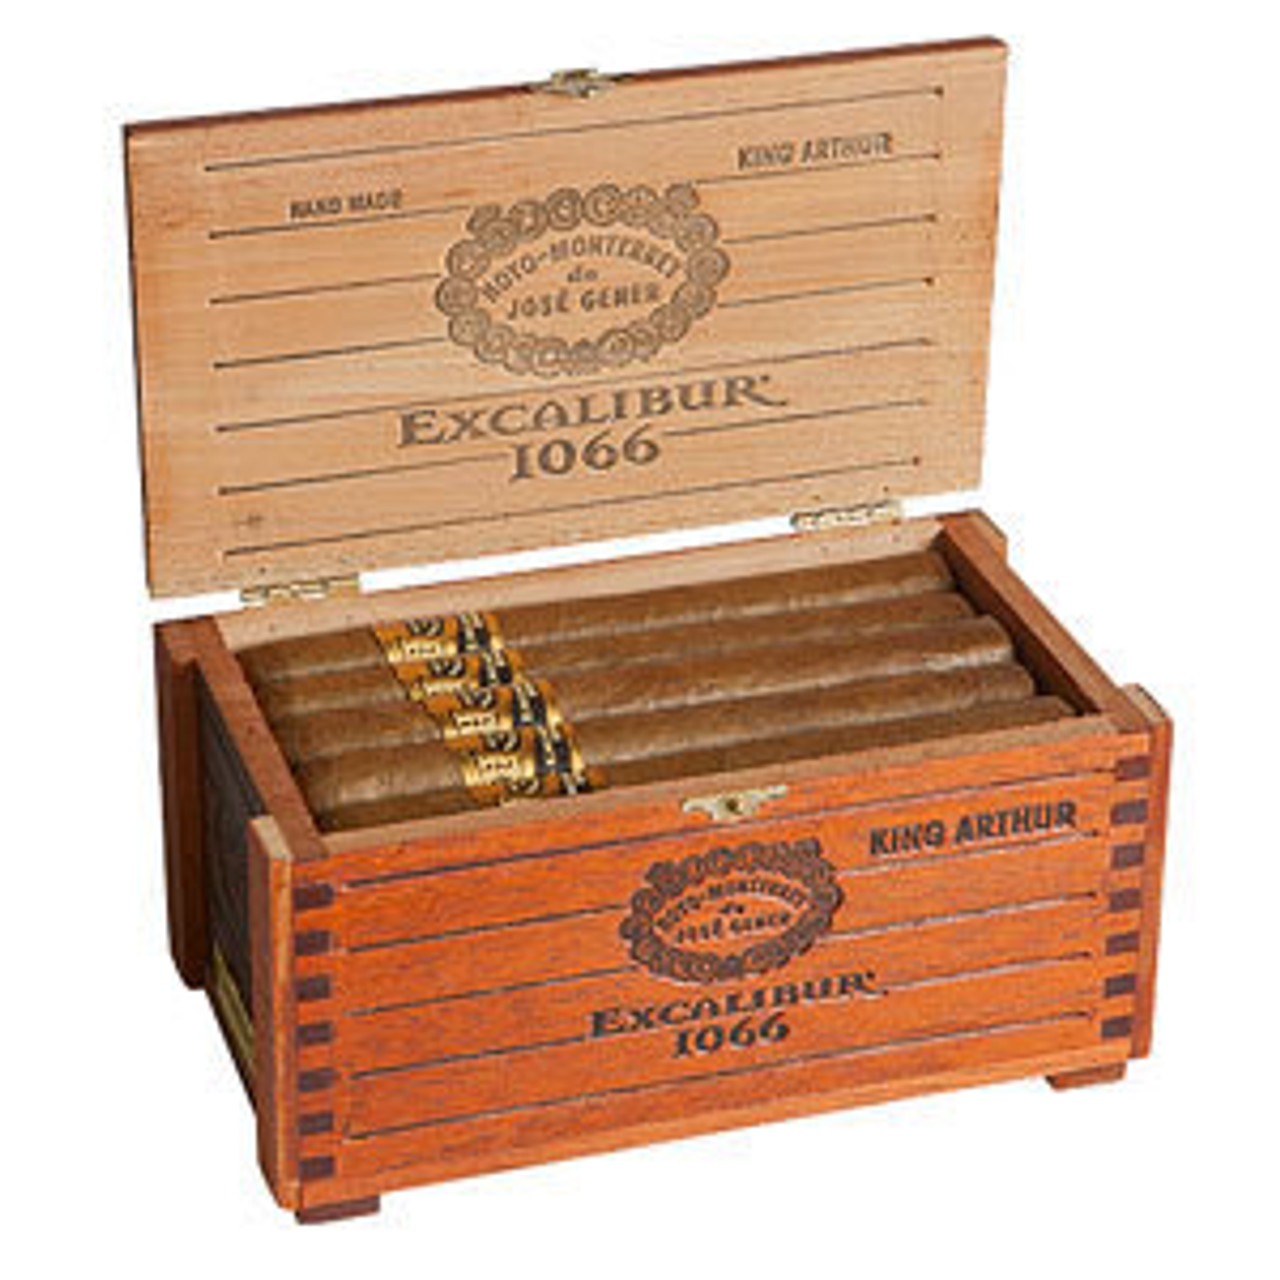 Excalibur Cameroon King Arthur Cigars - 6.25 x 45 (Box of 20) *Box